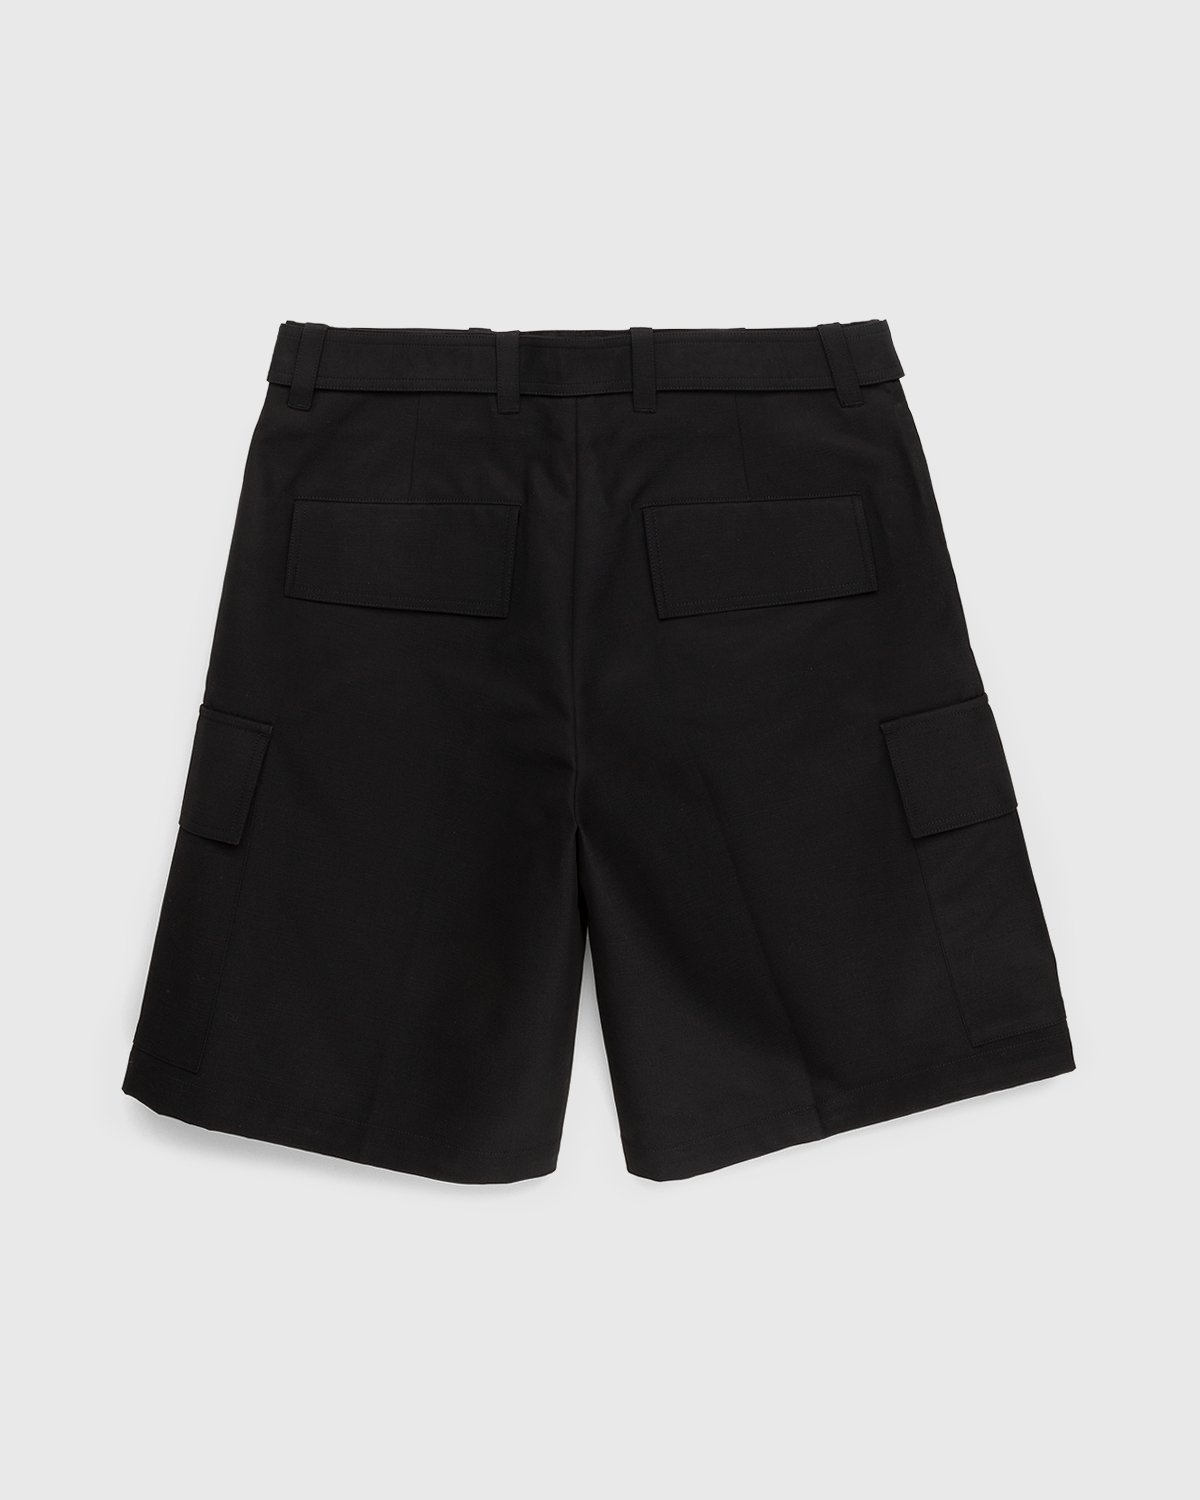 Jil Sander – Cotton Cargo Shorts Black - Cargo Shorts - Black - Image 2